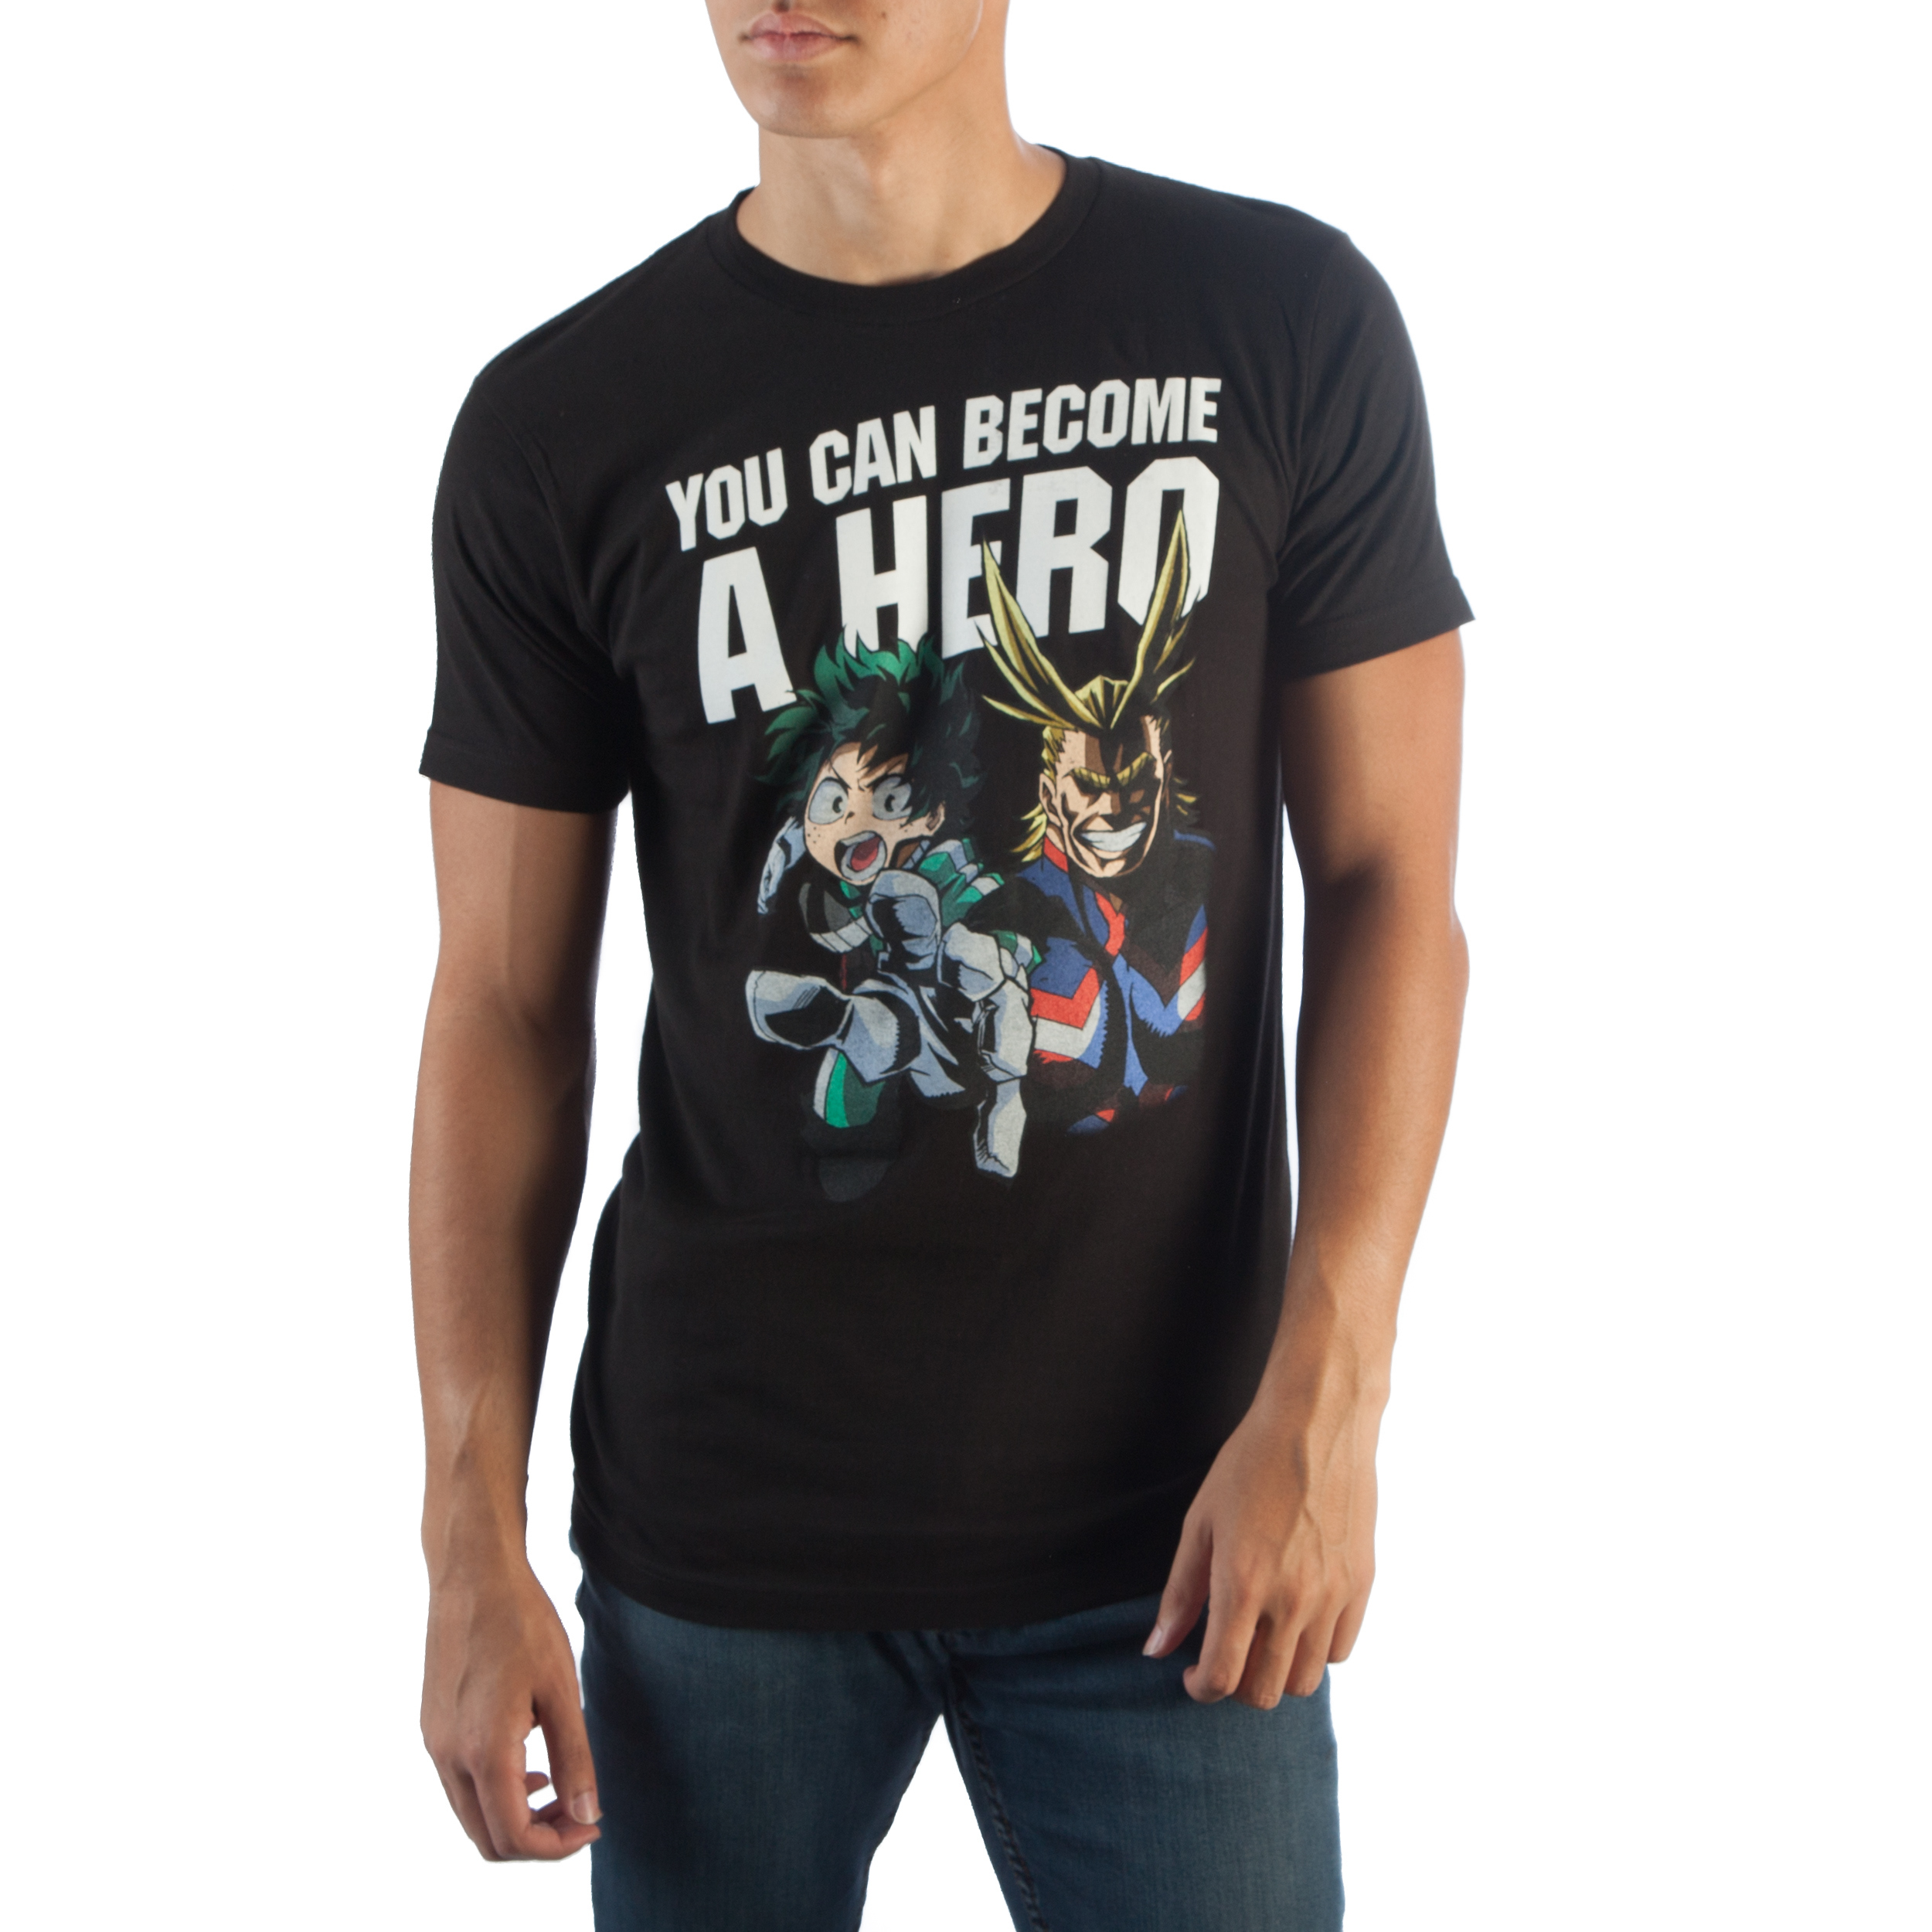 My Hero Academia Become A Hero T-Shirt (Medium) - image 1 of 3